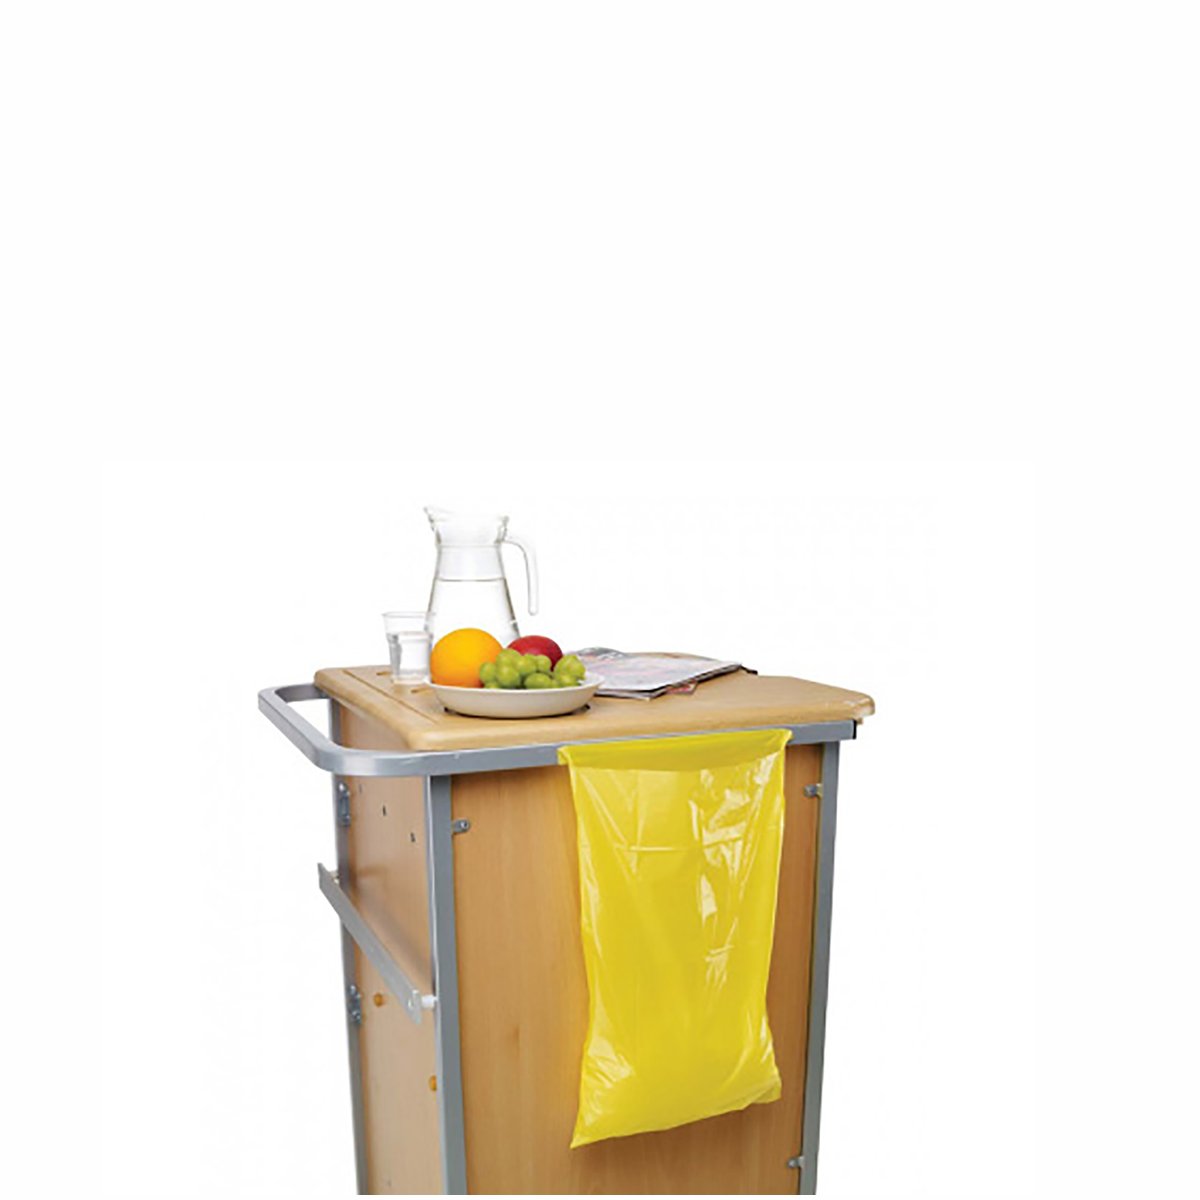 Pack of 25 27cm x 46cm Yellow Biohazard Disposal Bags